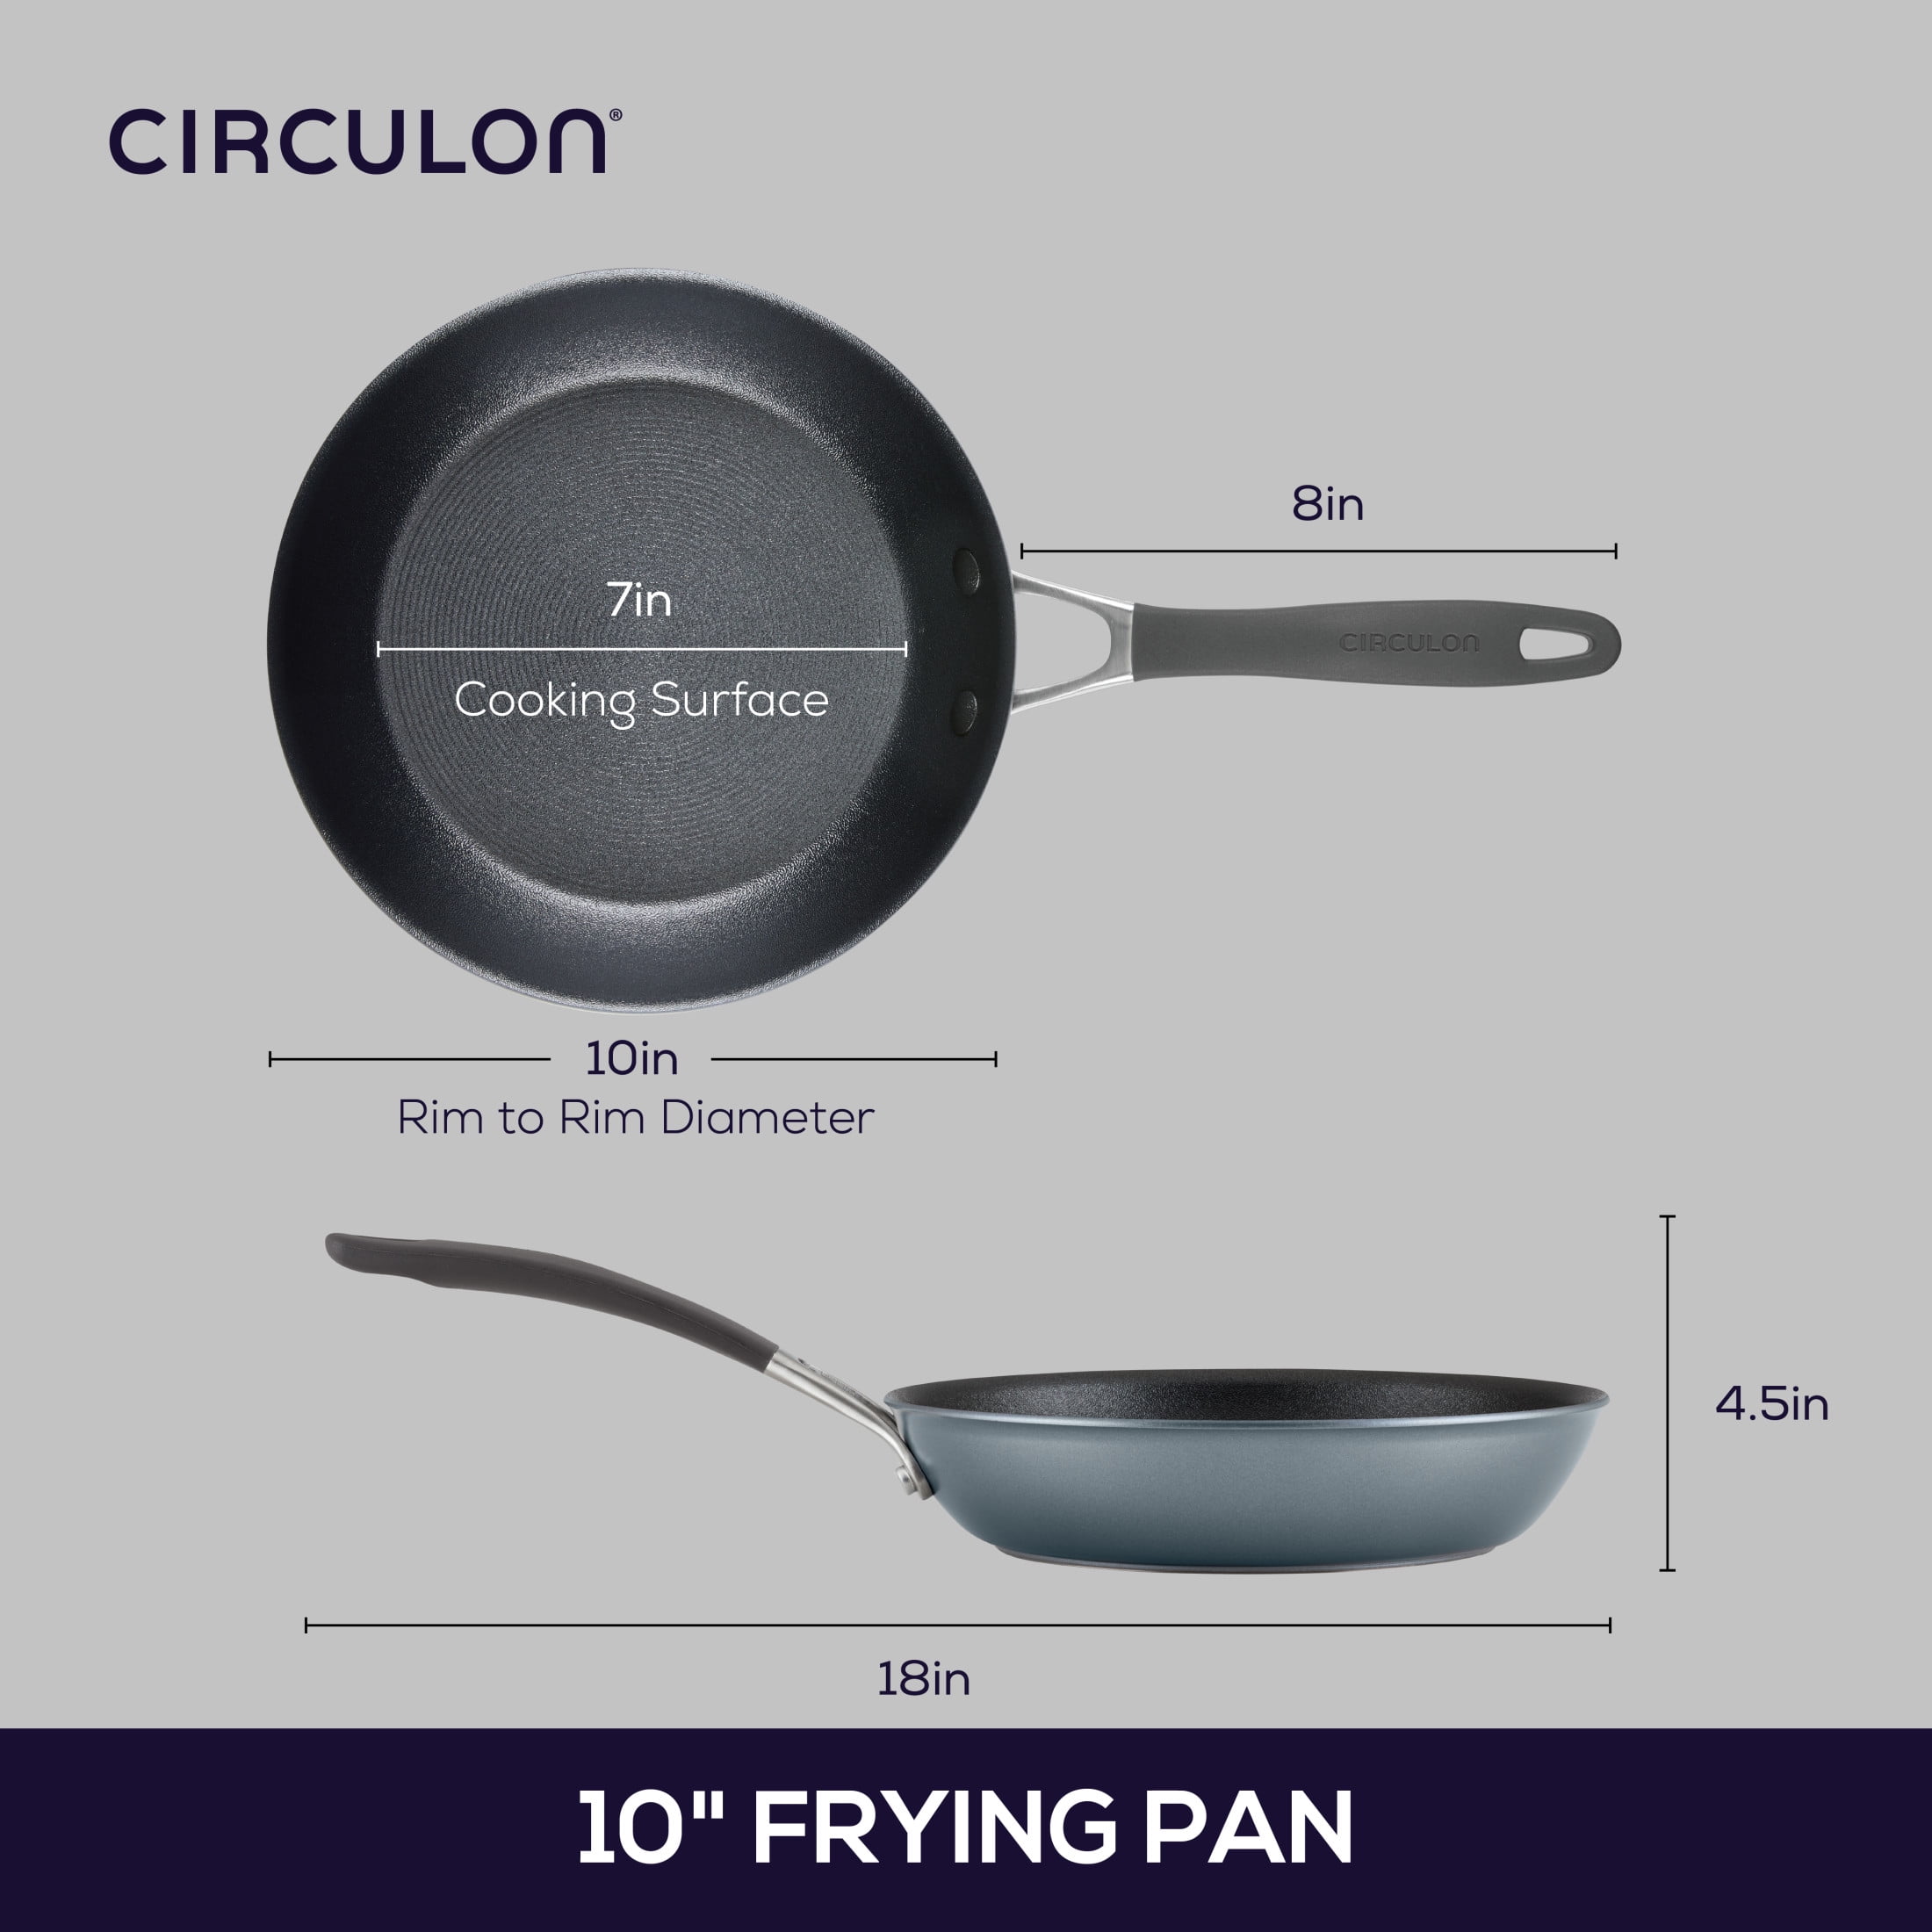 Circulon 9-Piece ScratchDefense A1 Series Nonstick Cookware Set, Graphite